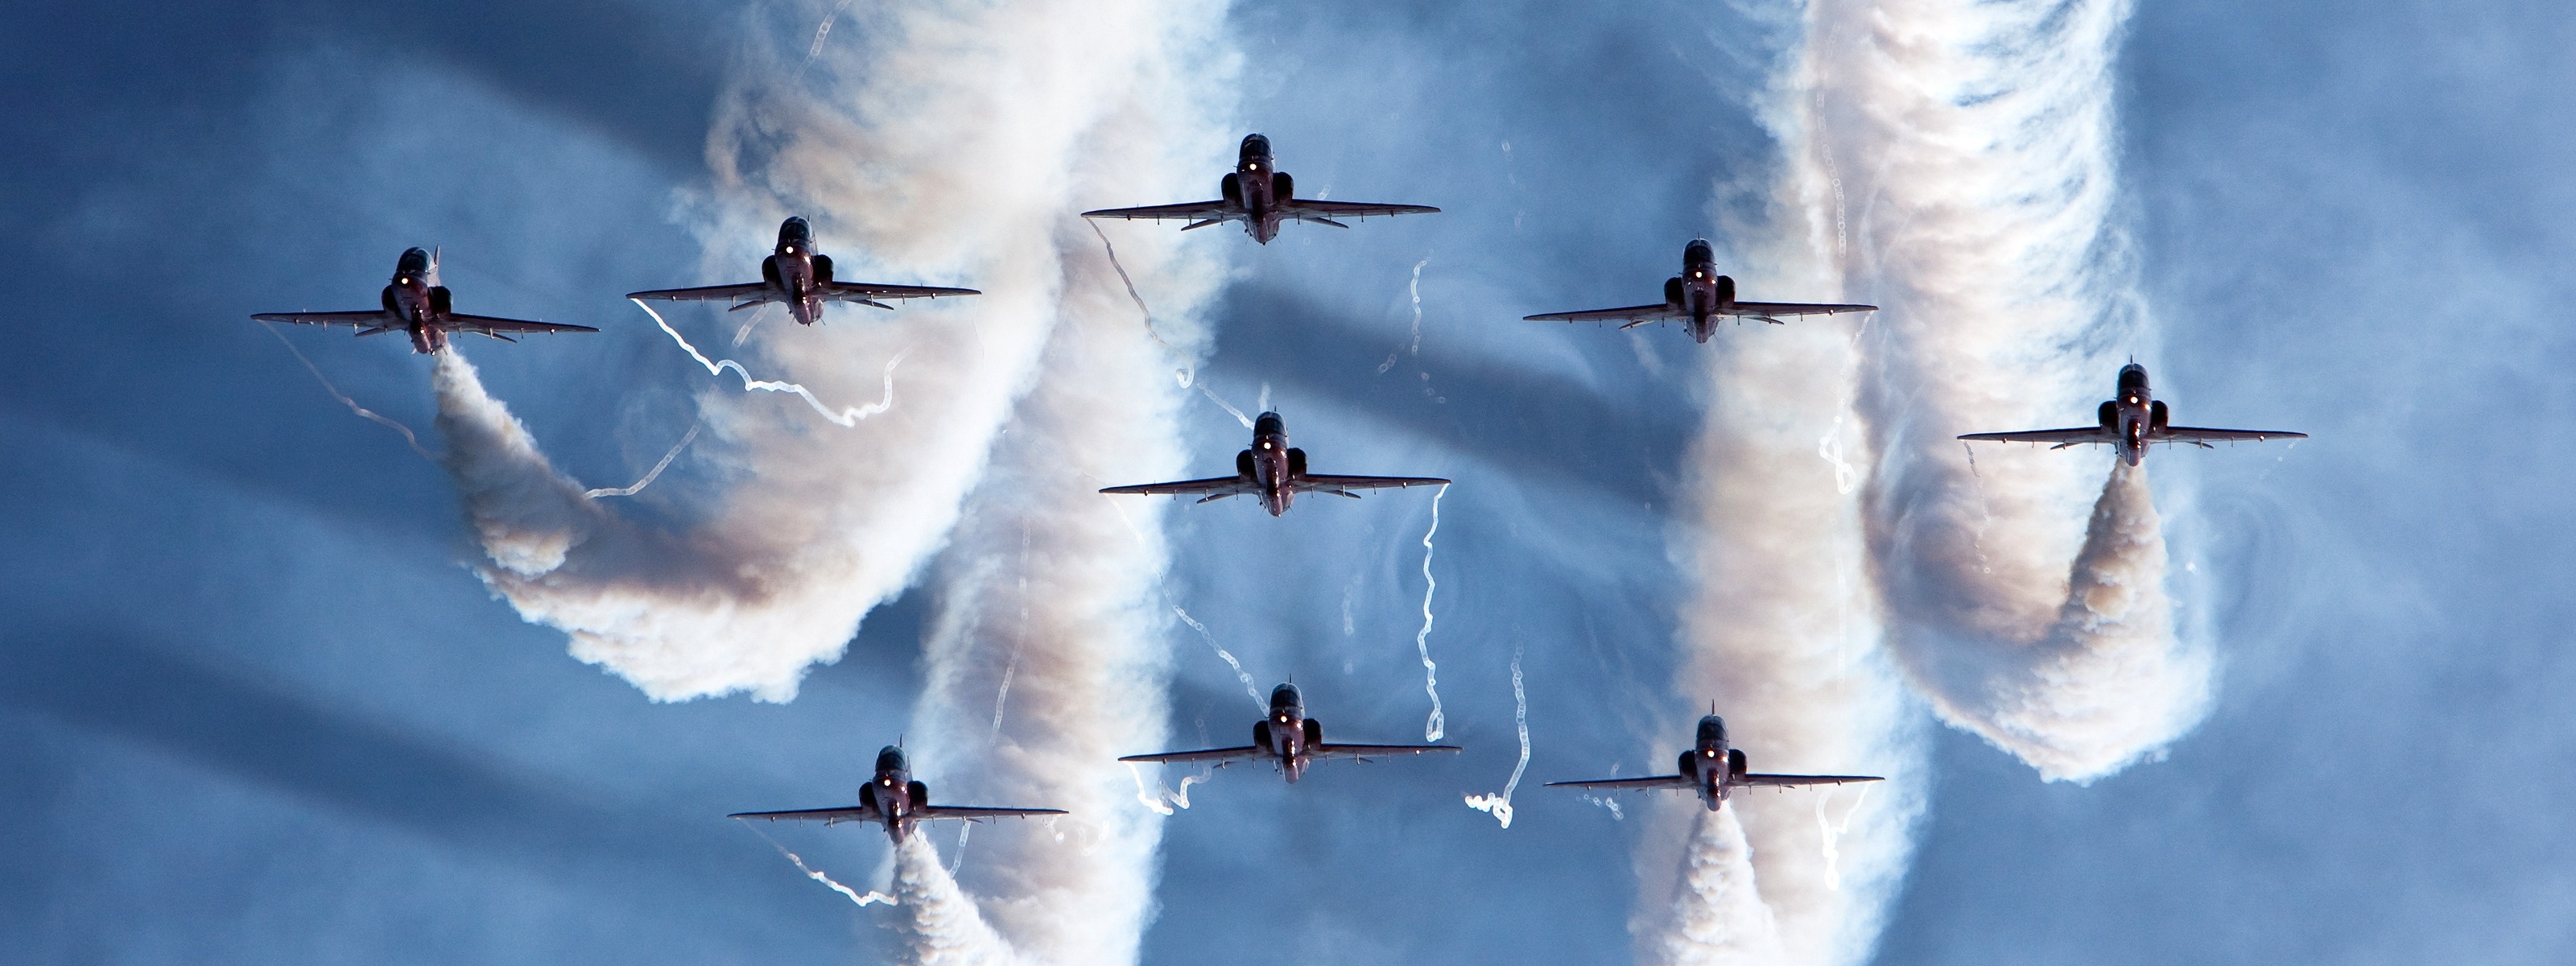 Aerobatics: Jet-engined flying maneuvers team, Extreme air sport. 3200x1200 Dual Screen Wallpaper.